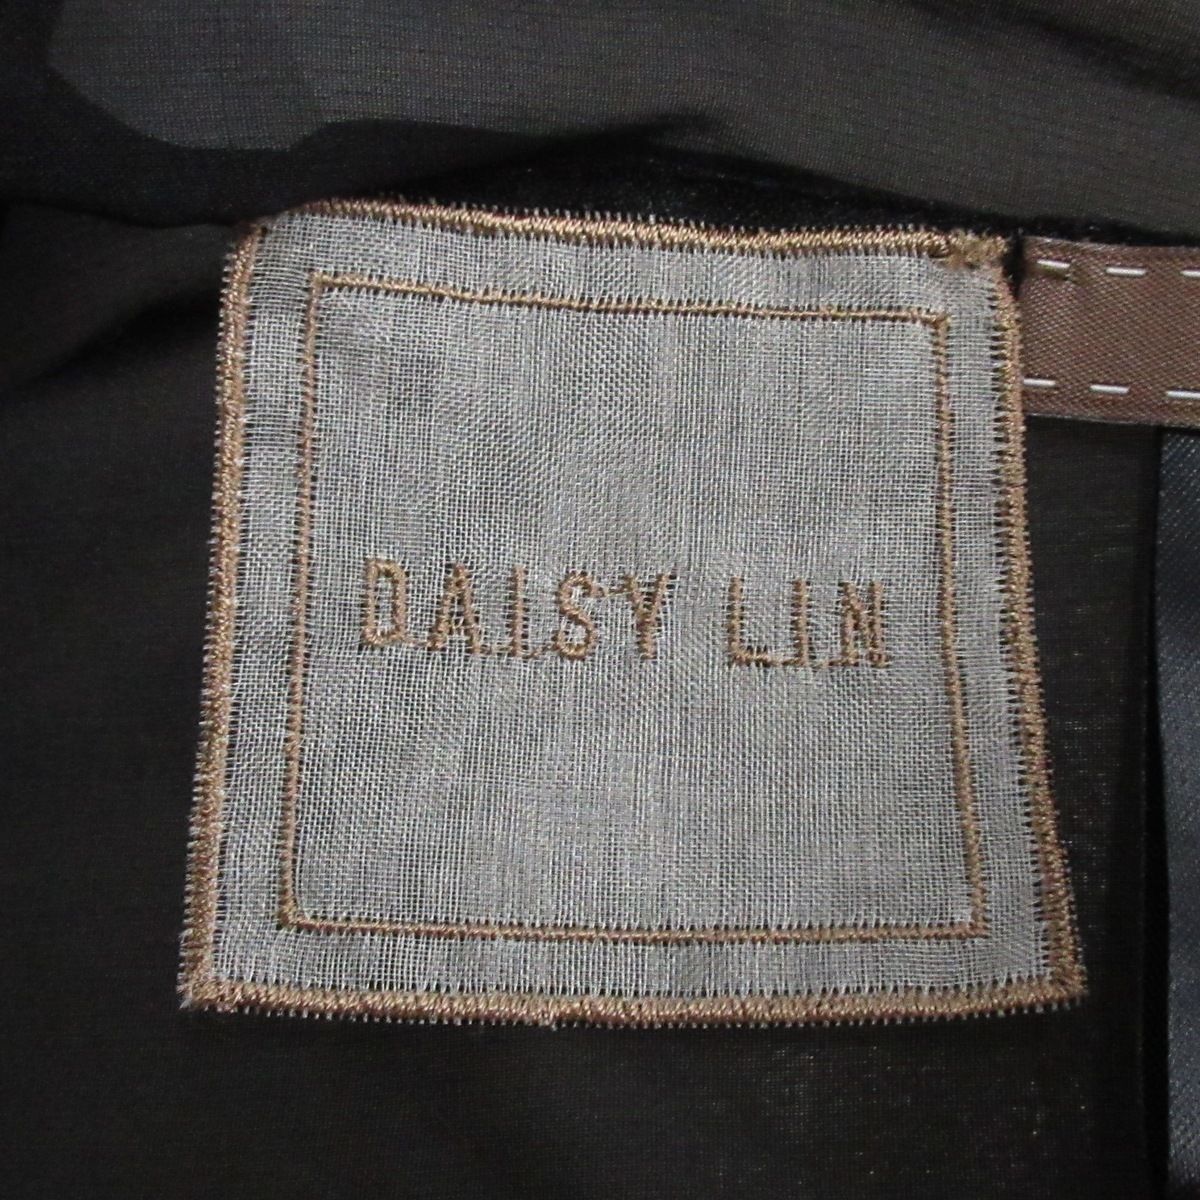 DAISY LIN(デイジーリン) カーディガン サイズ40 M レディース美品 - 黒 七分袖/シルク/シースルー